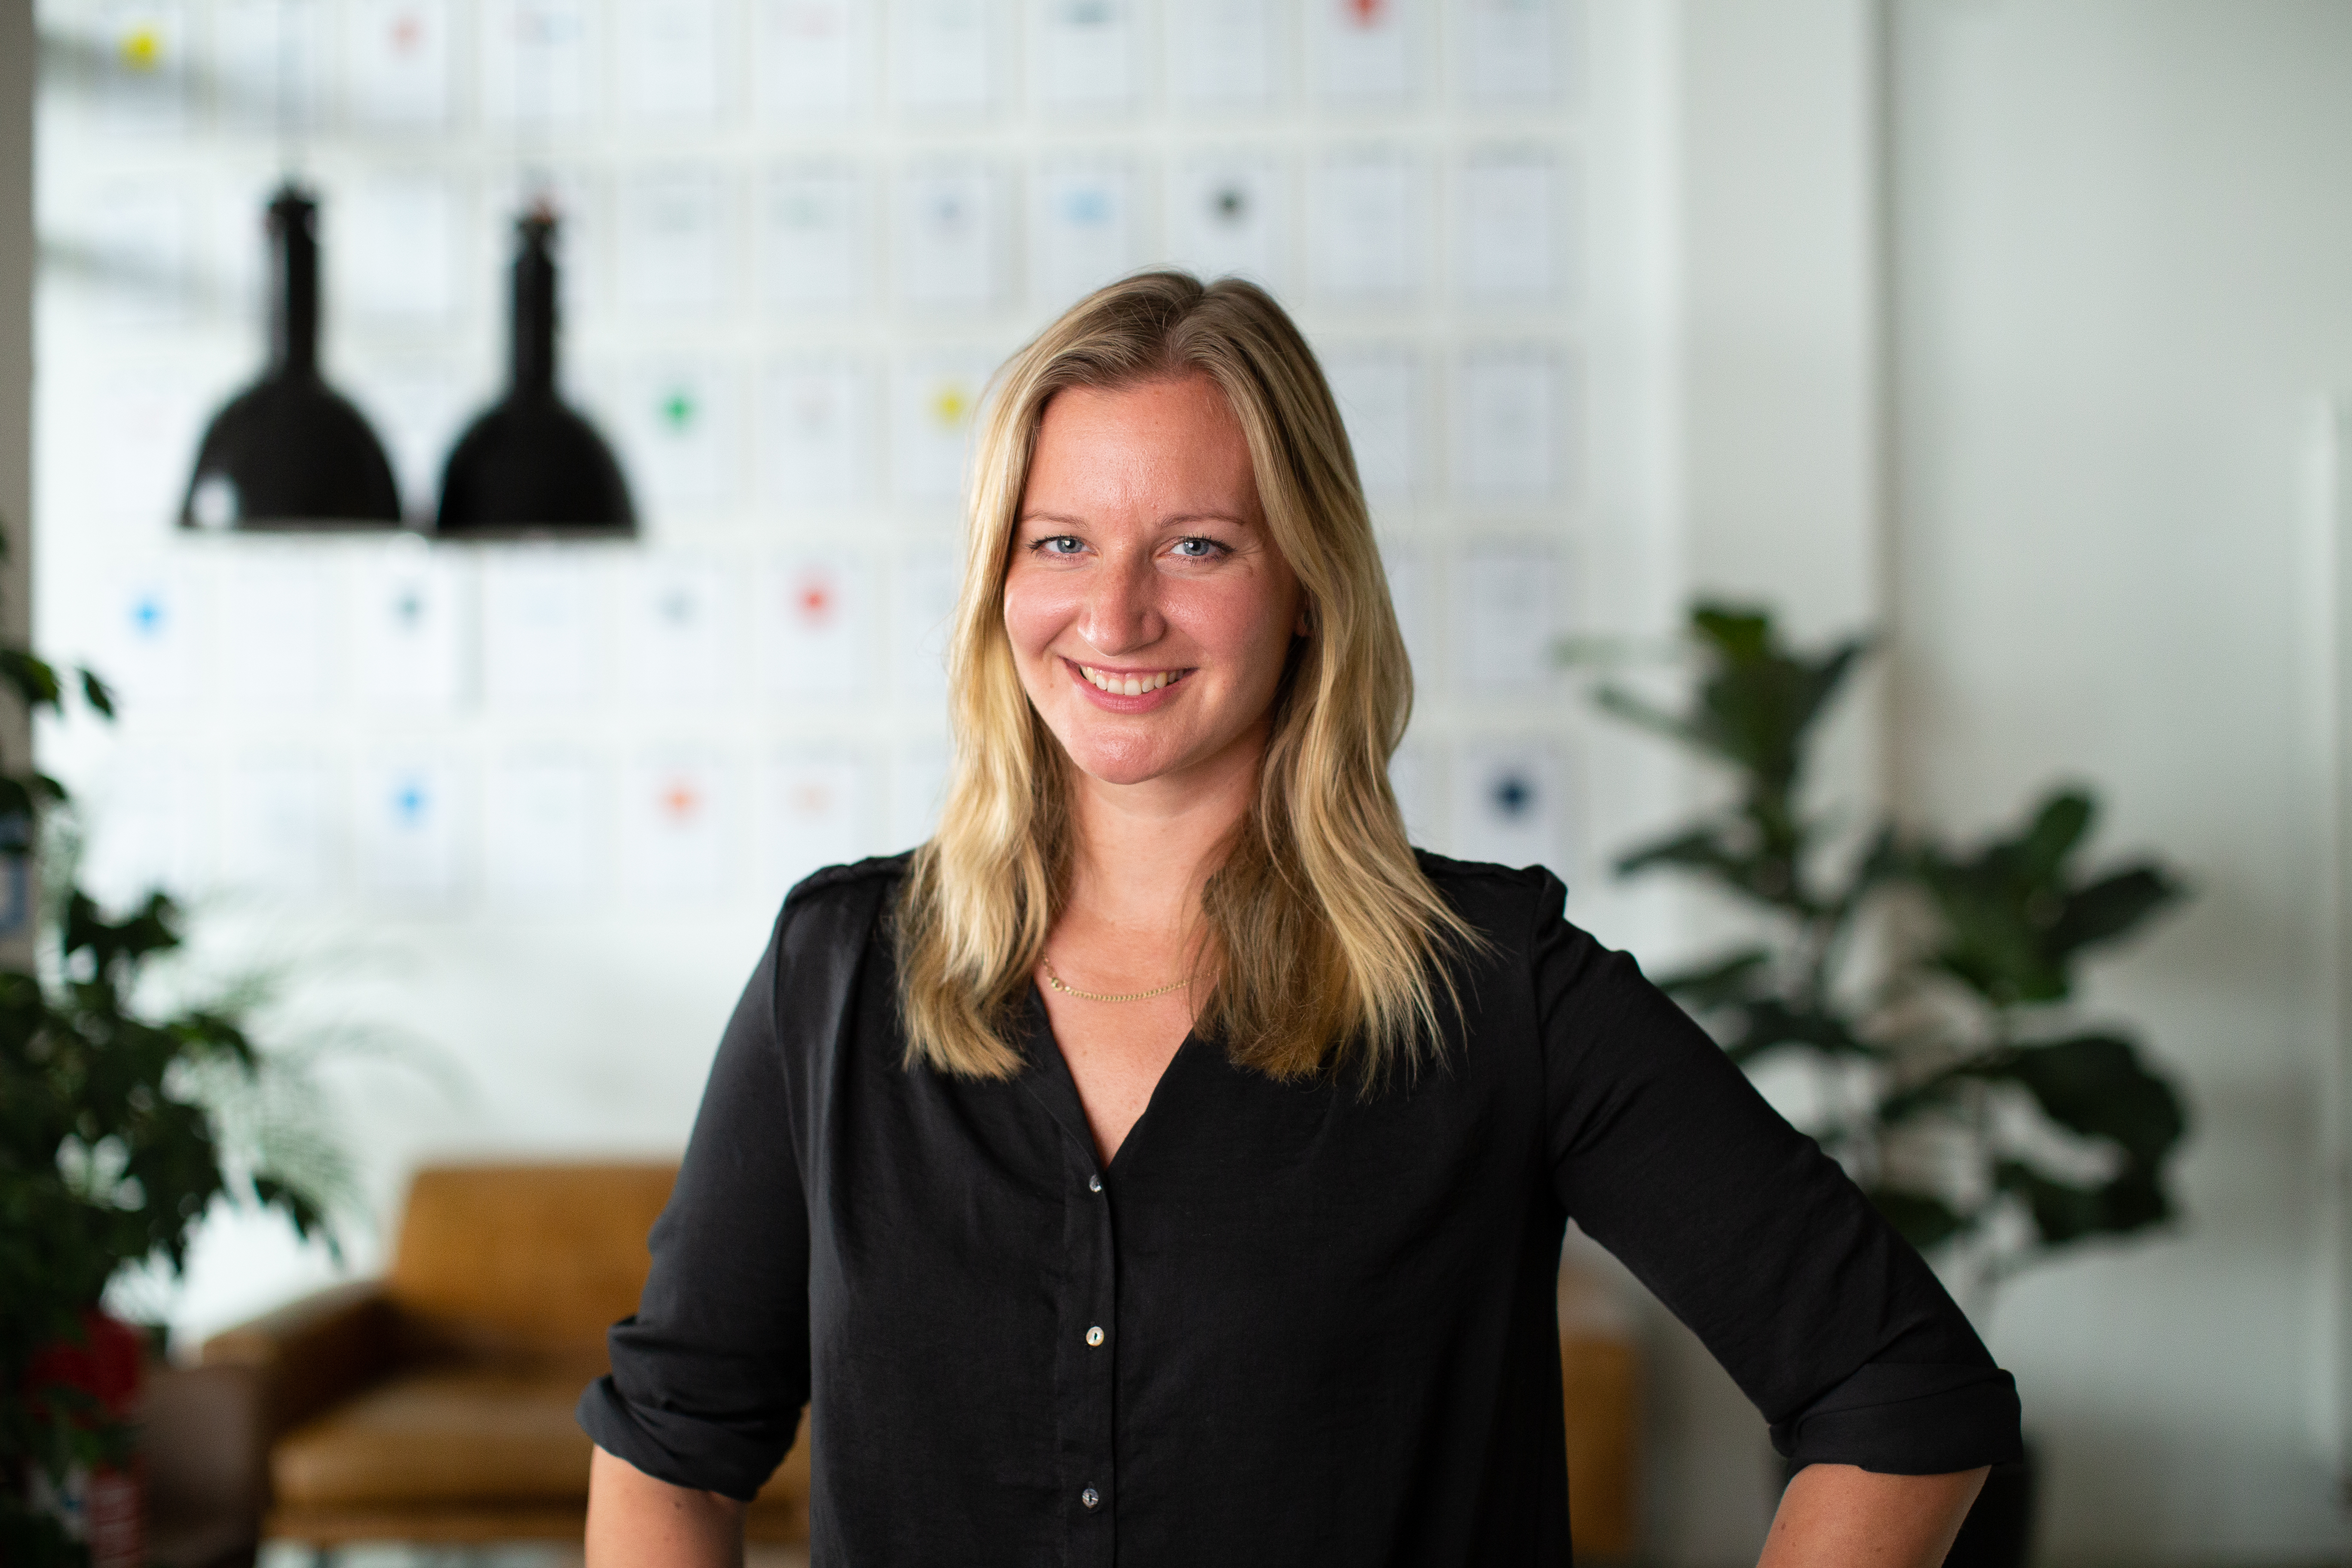 Jana Bartels – General Manager for Hardware and Vehicles at Wunder